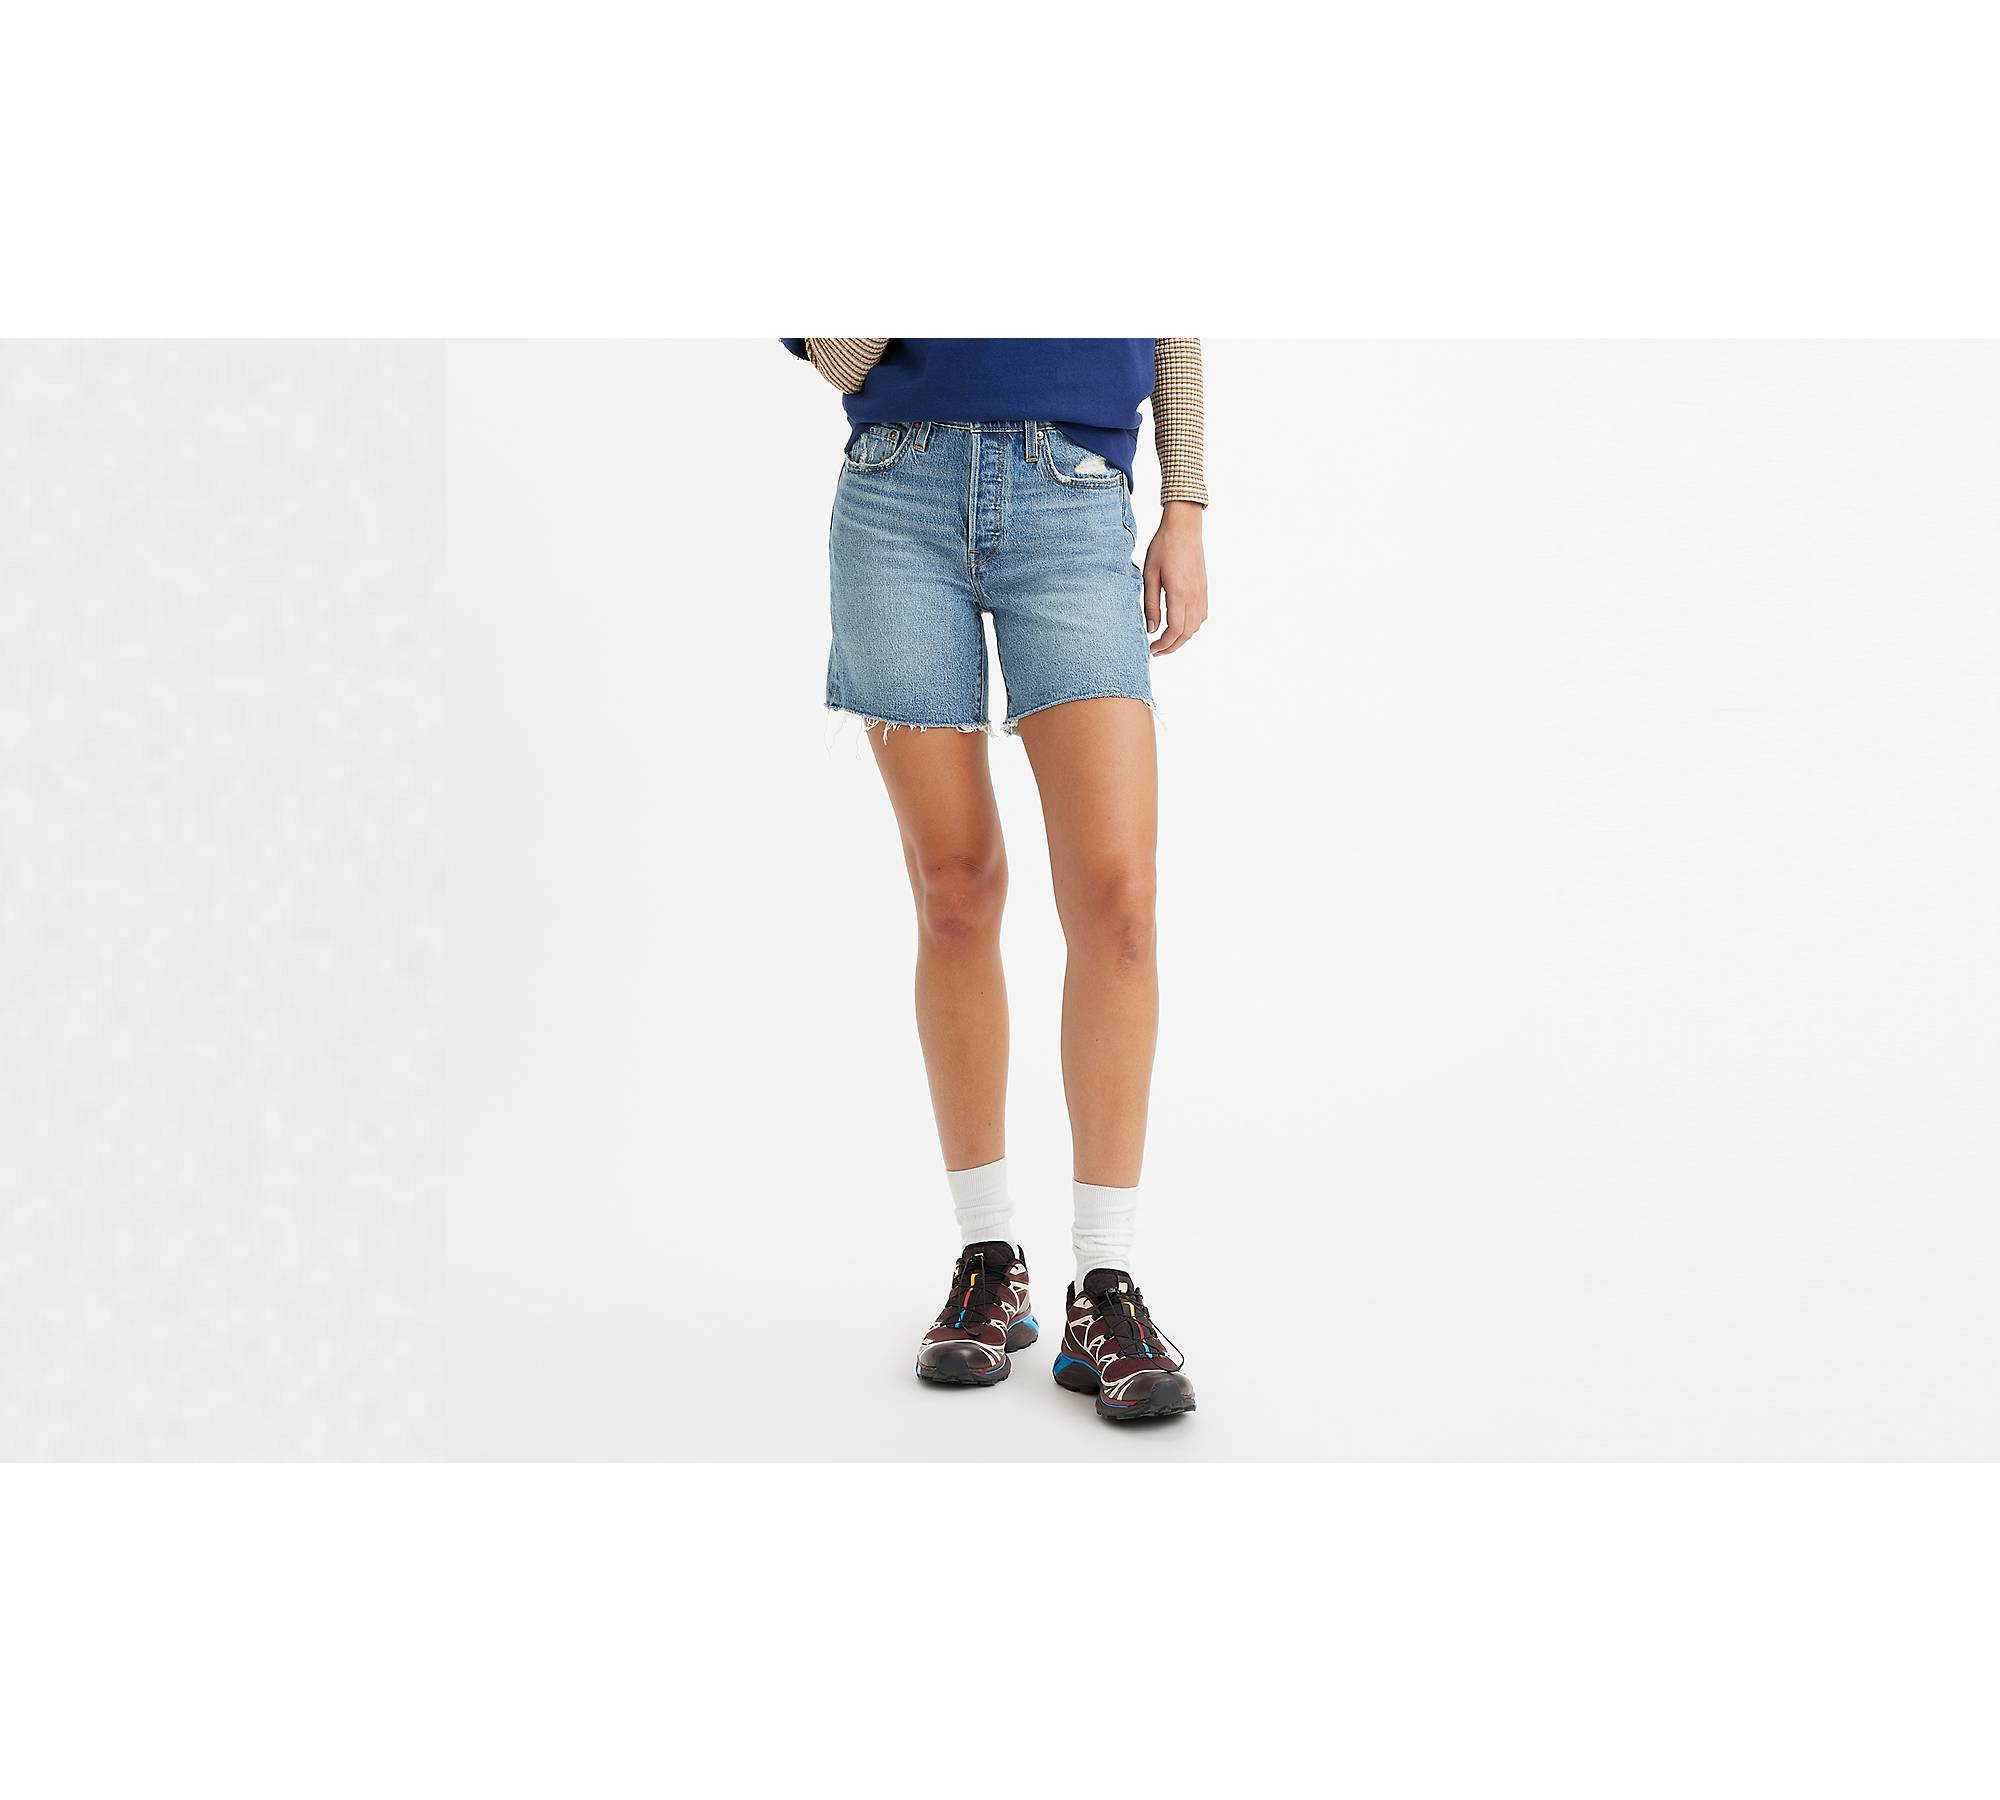 Levi's 501 Mid Thigh Shorts #Sponsored , #SPONSORED, #Levi, #Shorts, #Thigh,  #Mid